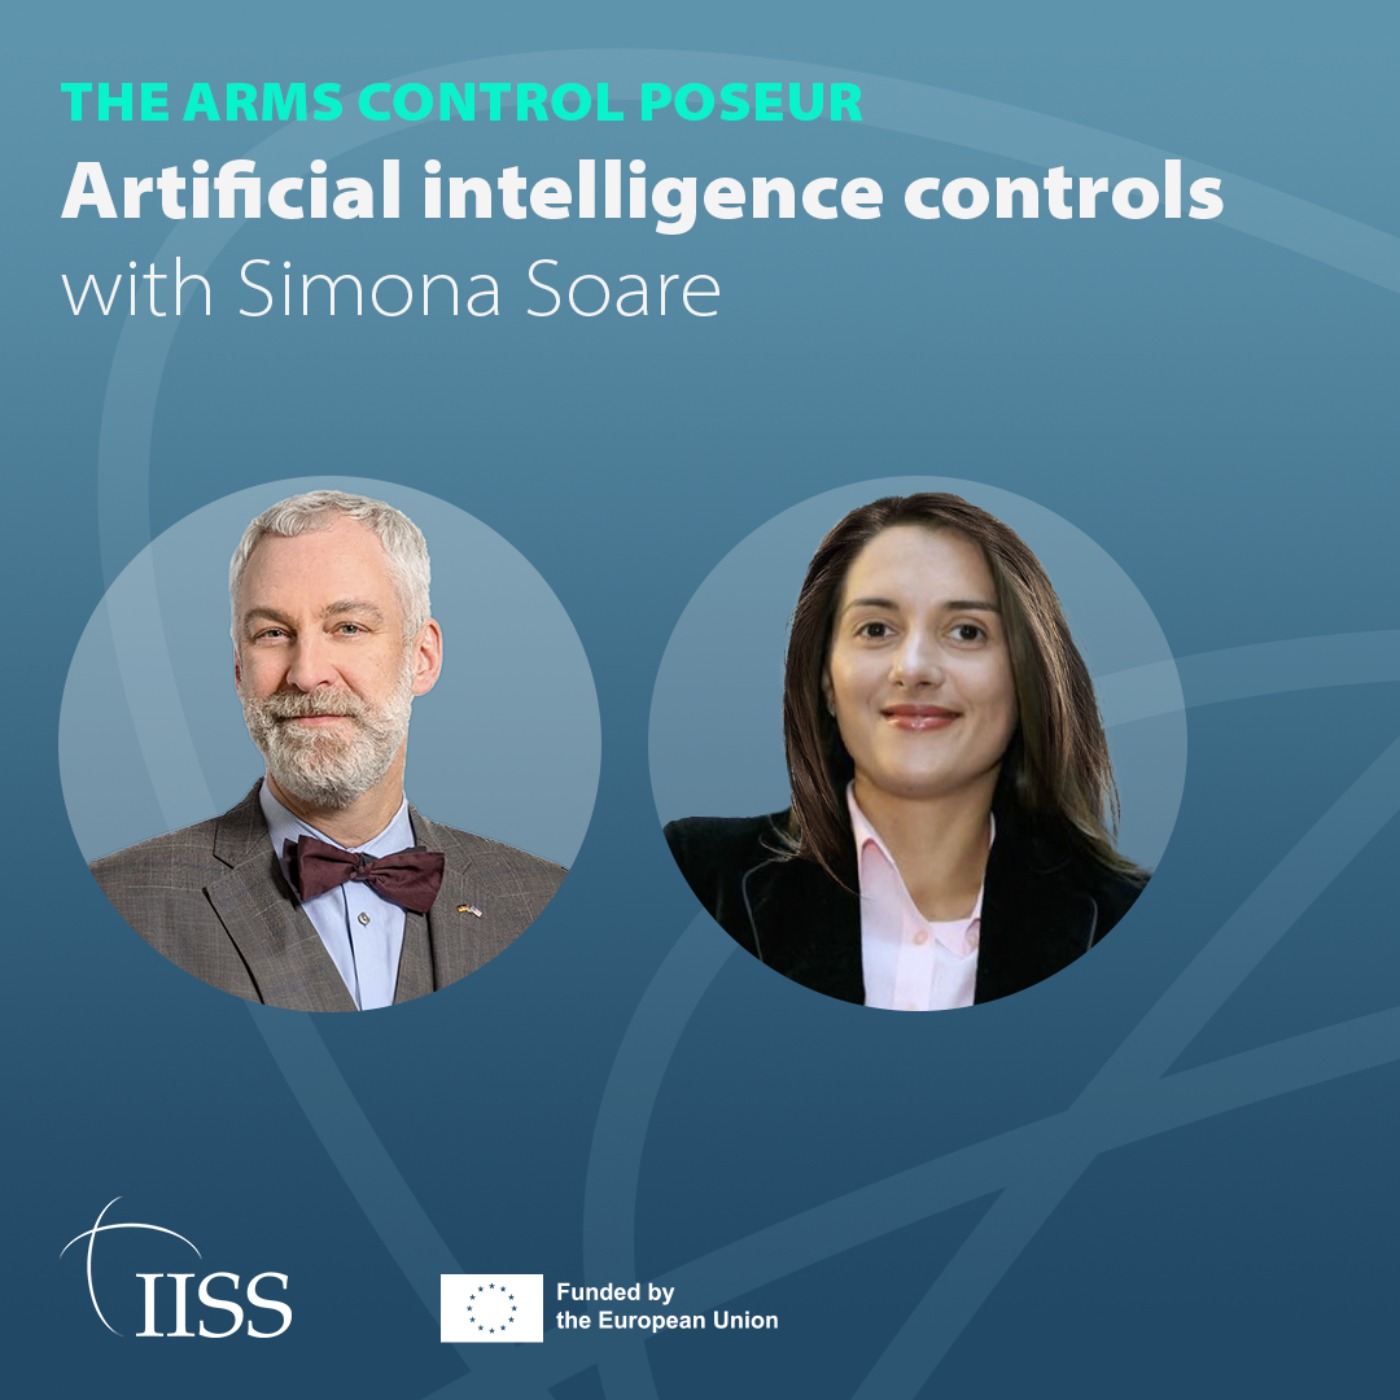 Artificial intelligence controls with Simona Soare